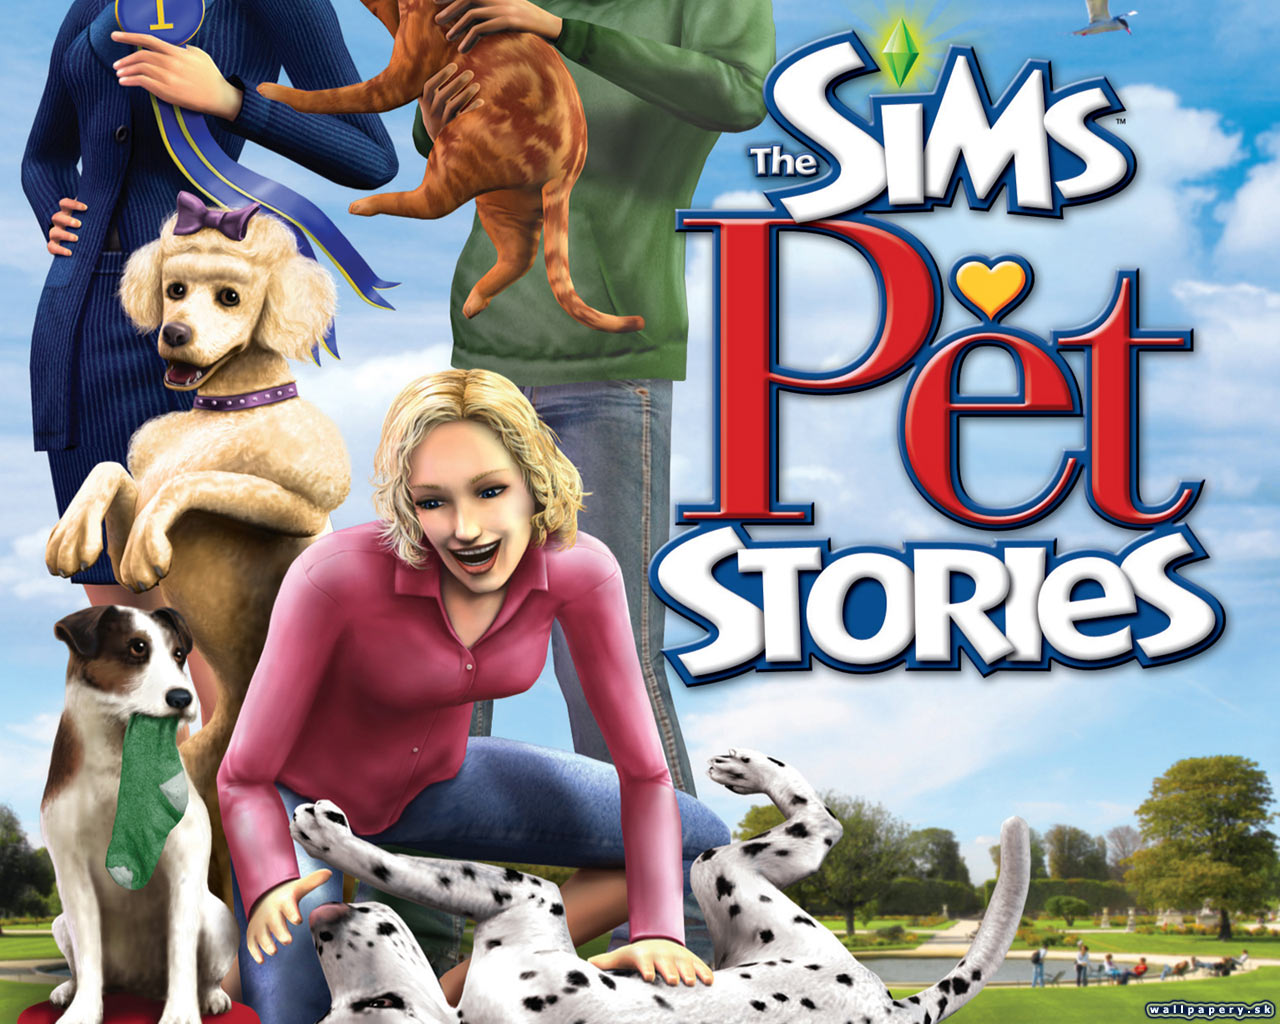 The Sims Pet Stories - wallpaper 2